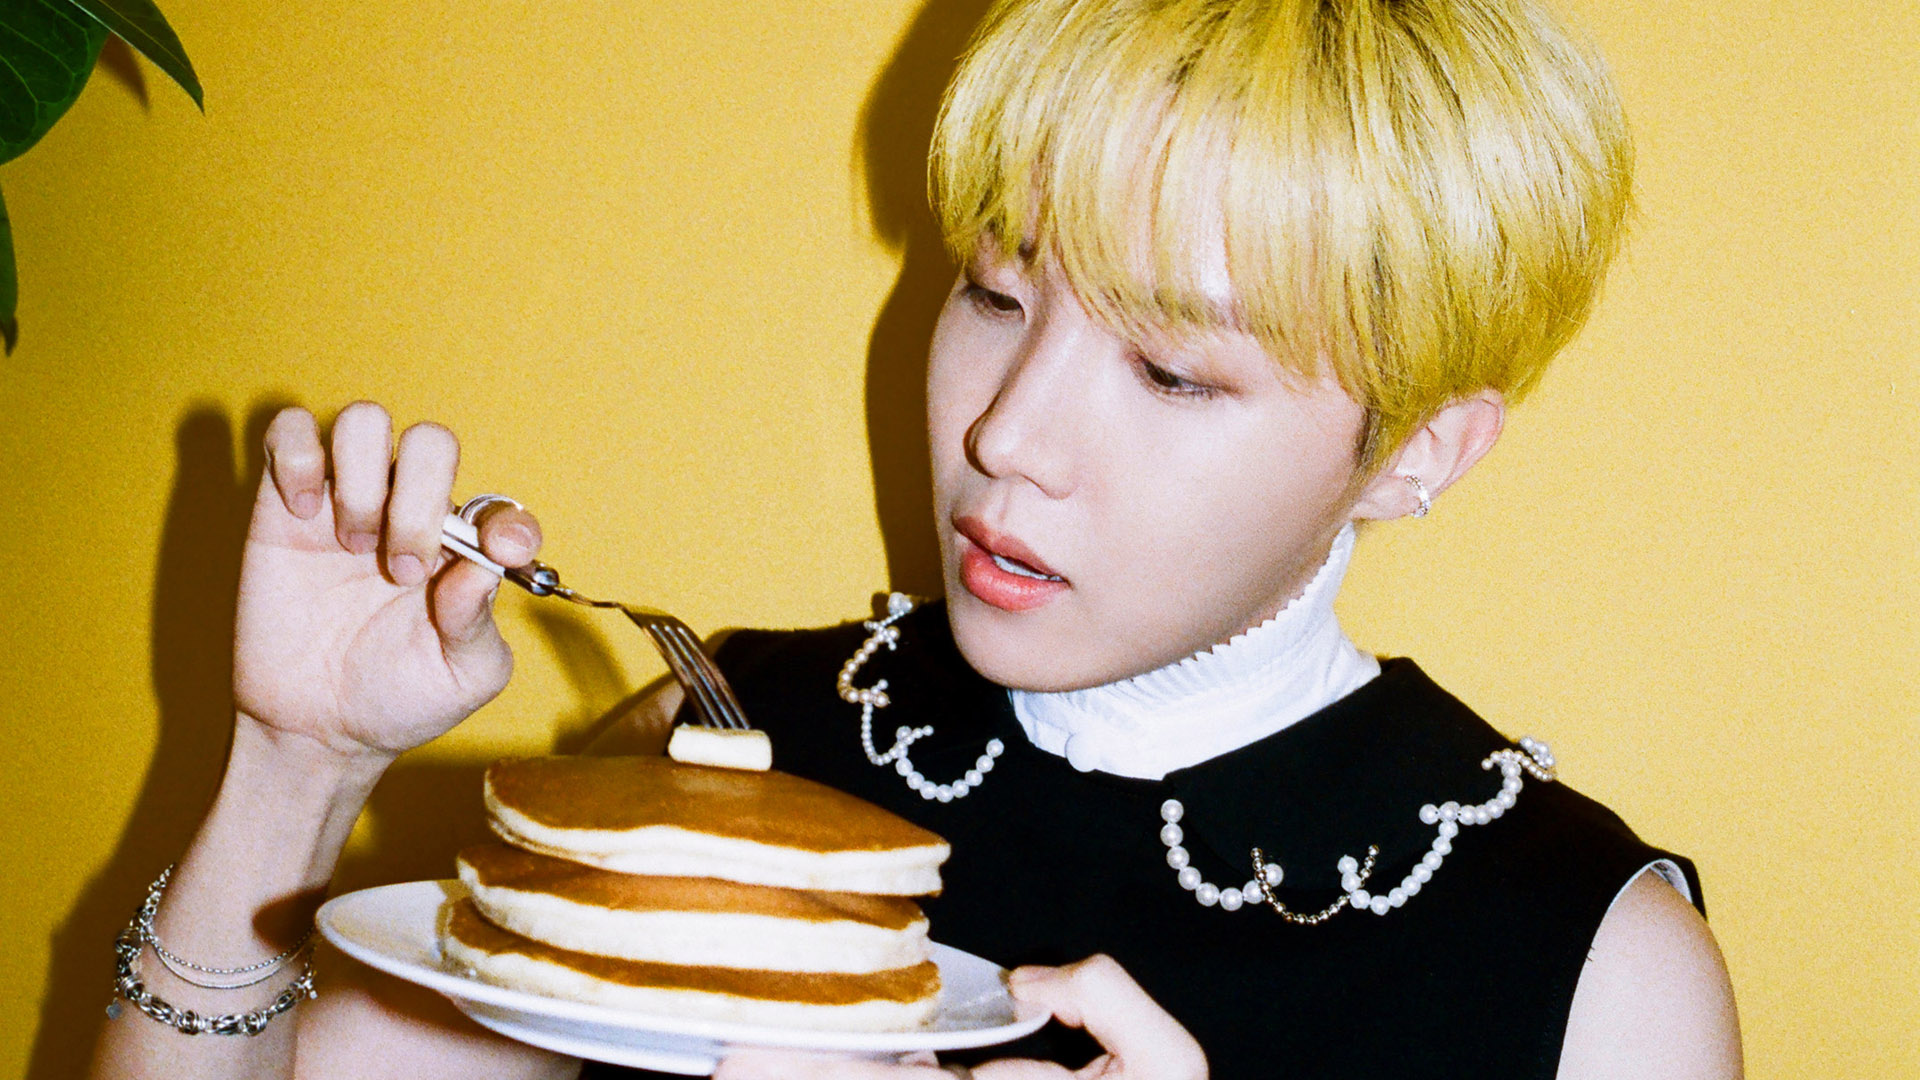 Yellow Hair J-Hope K-Pop Singer Is Eating Pancake 2K BTS J-Hope